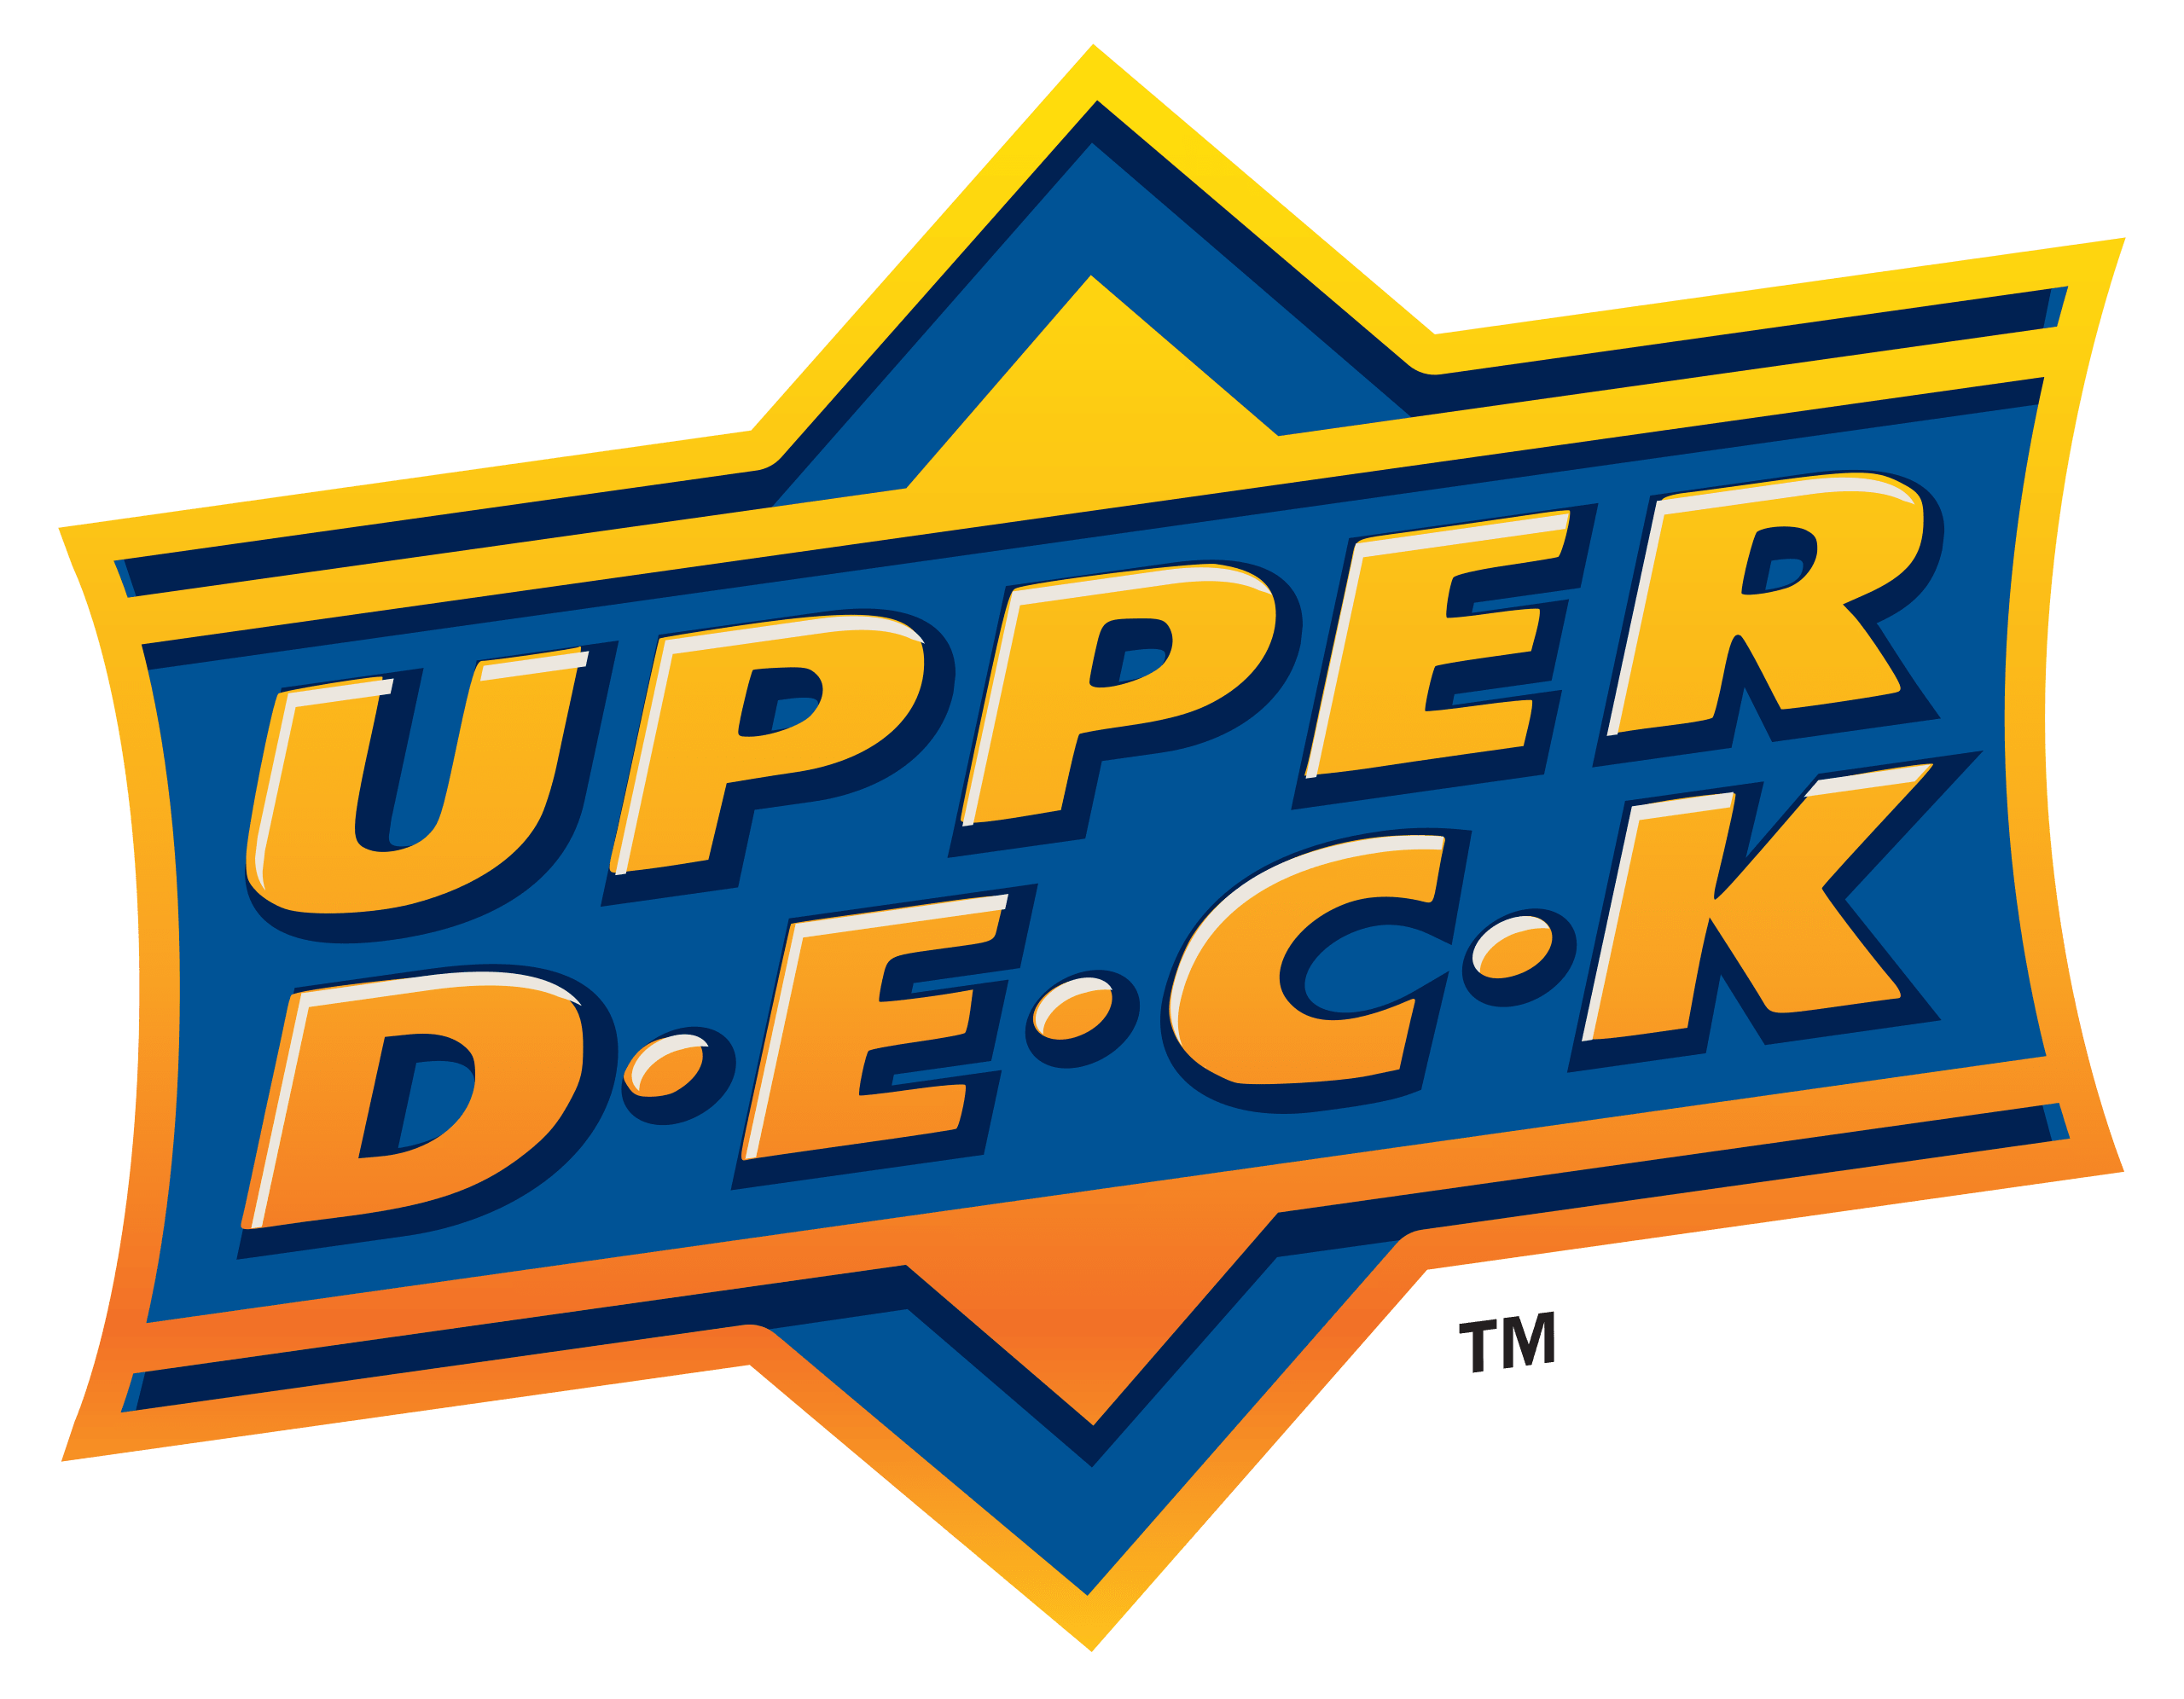 Hockey - 2022/23 - Upper Deck Series 1 - Hobby Pack (8 Cards) - Hobby Champion Inc